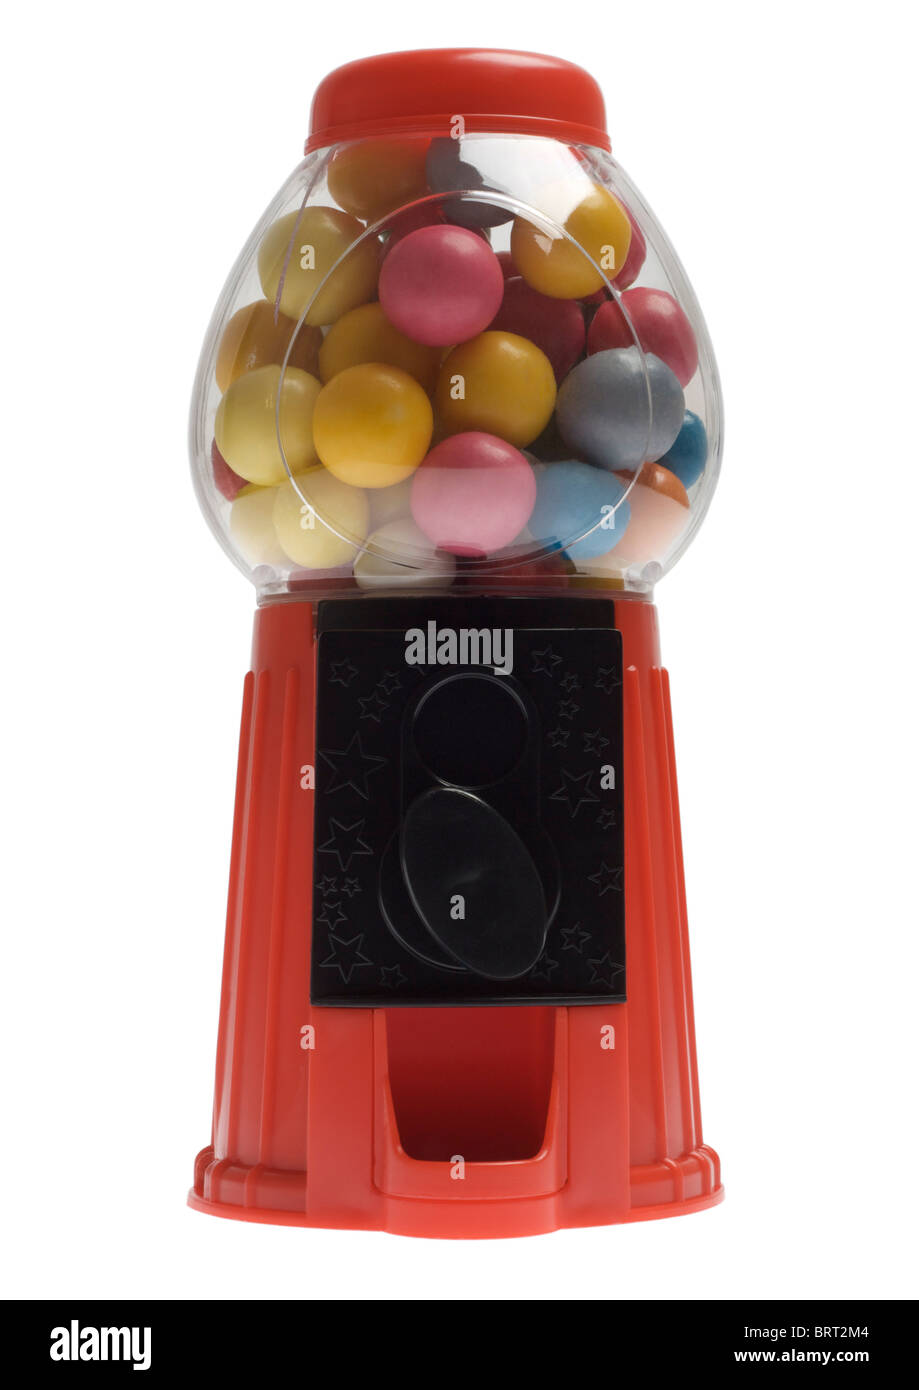 Maquina de bolas fotografías e imágenes de alta resolución - Alamy